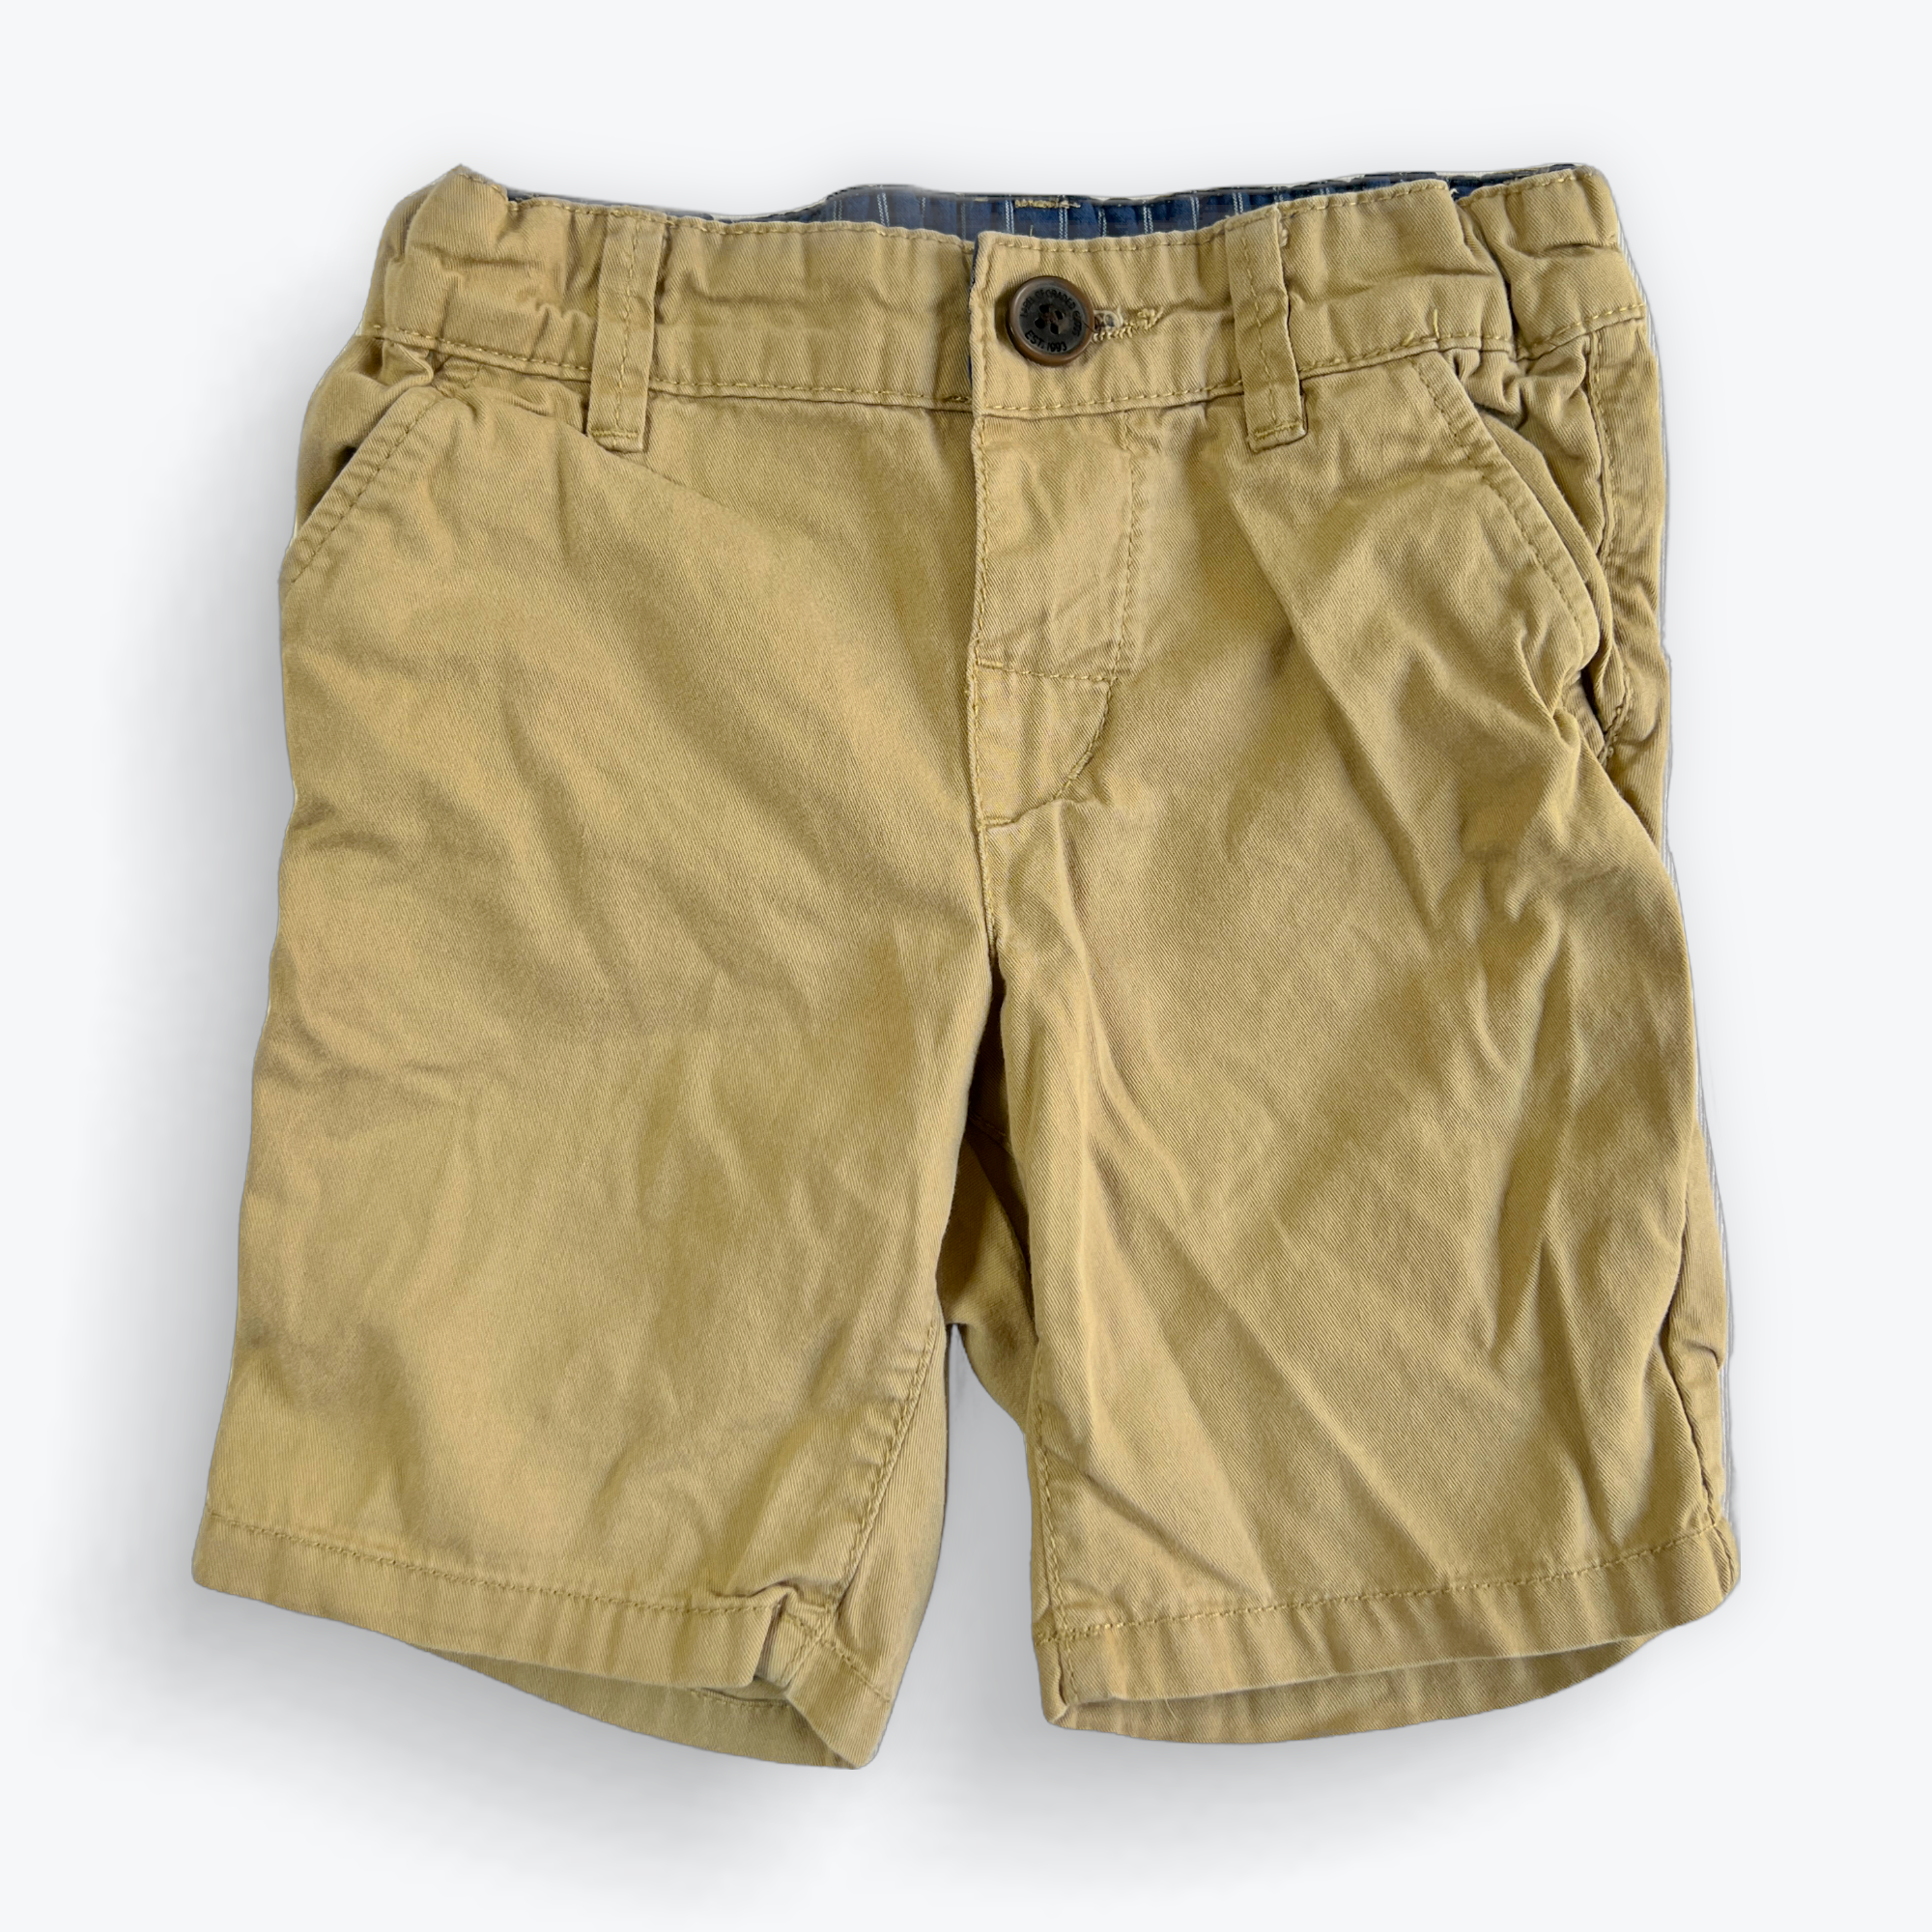 Twill Shorts - 1.5/2